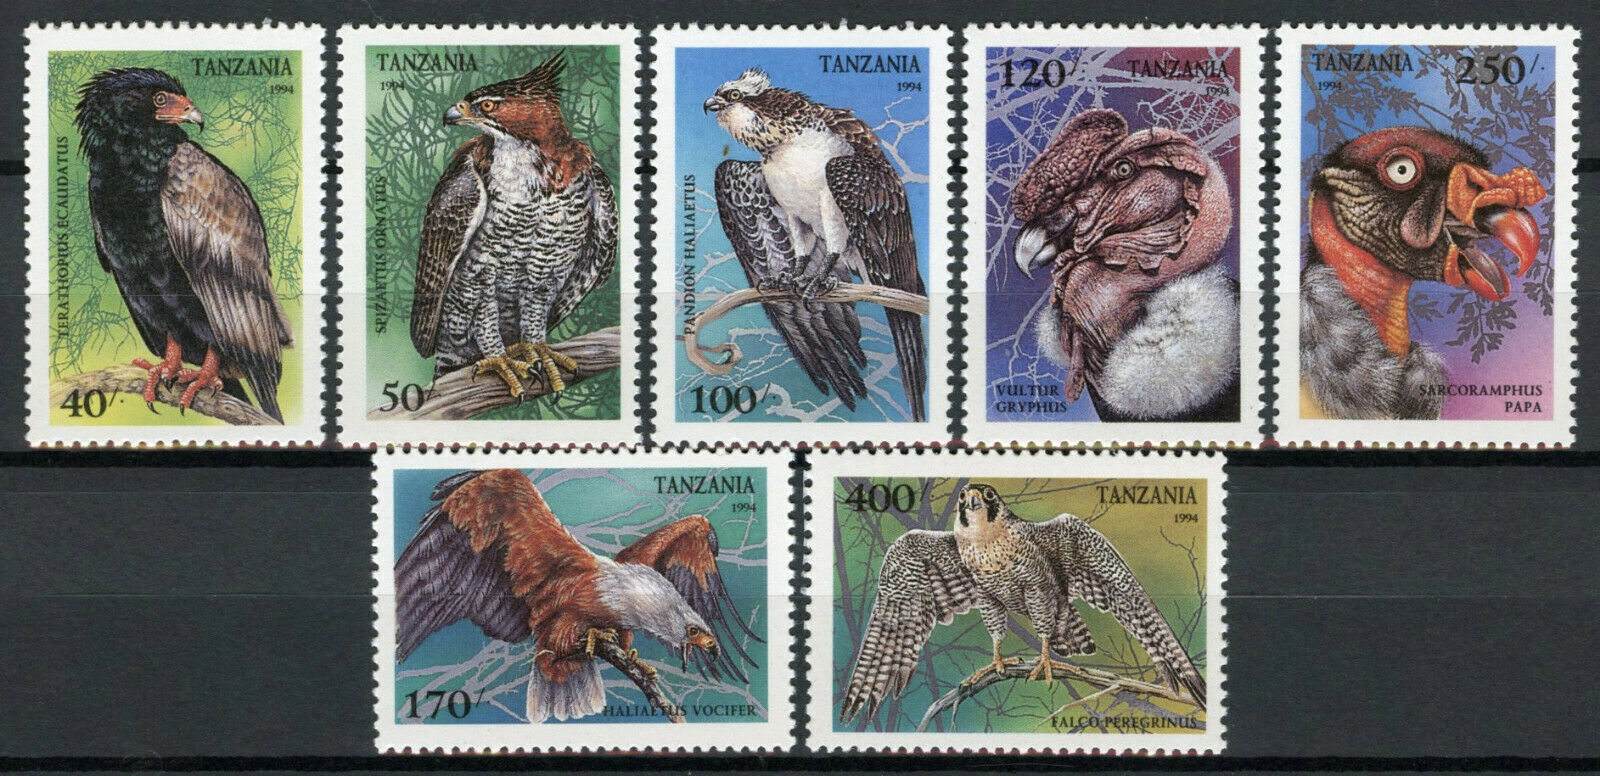 Tanzania 1994 MNH Birds of Prey on Stamps Raptors Vultures Falcons 7v Set